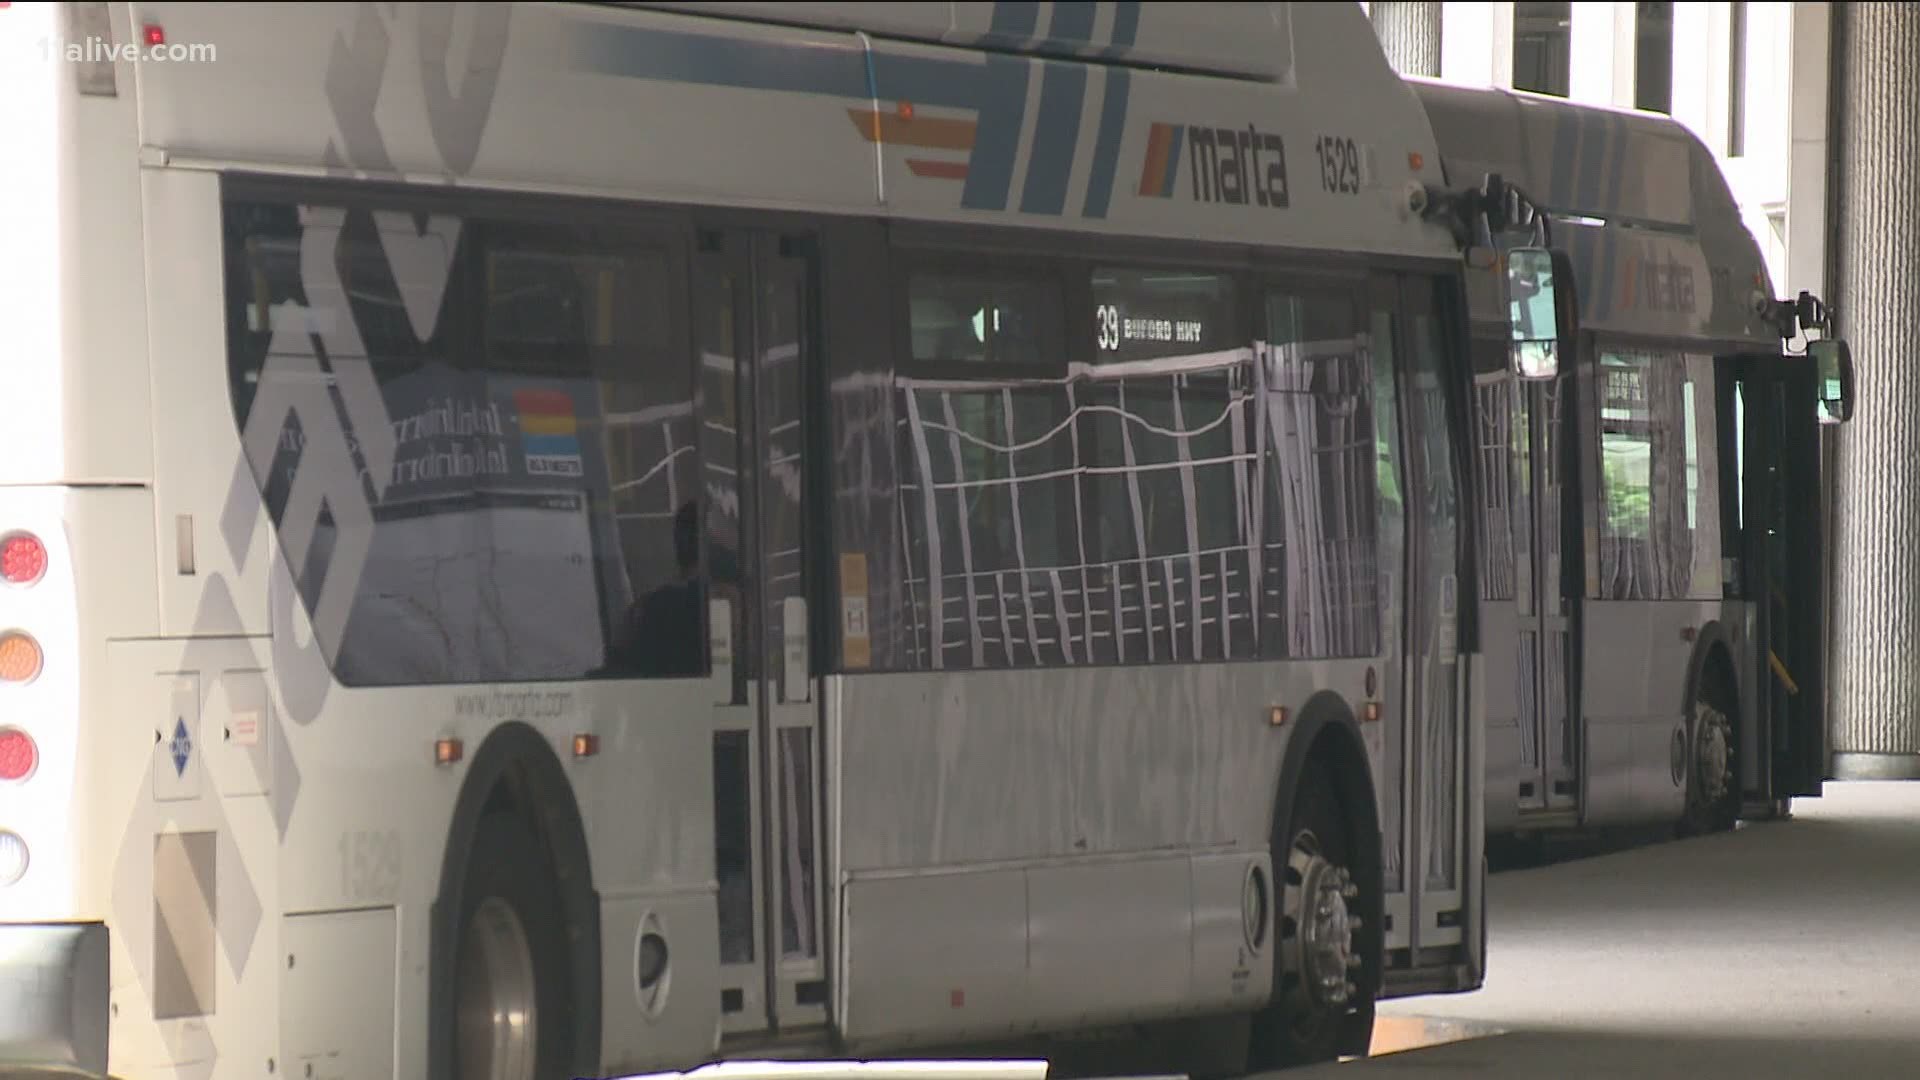 marta bus routes alpharetta to airport